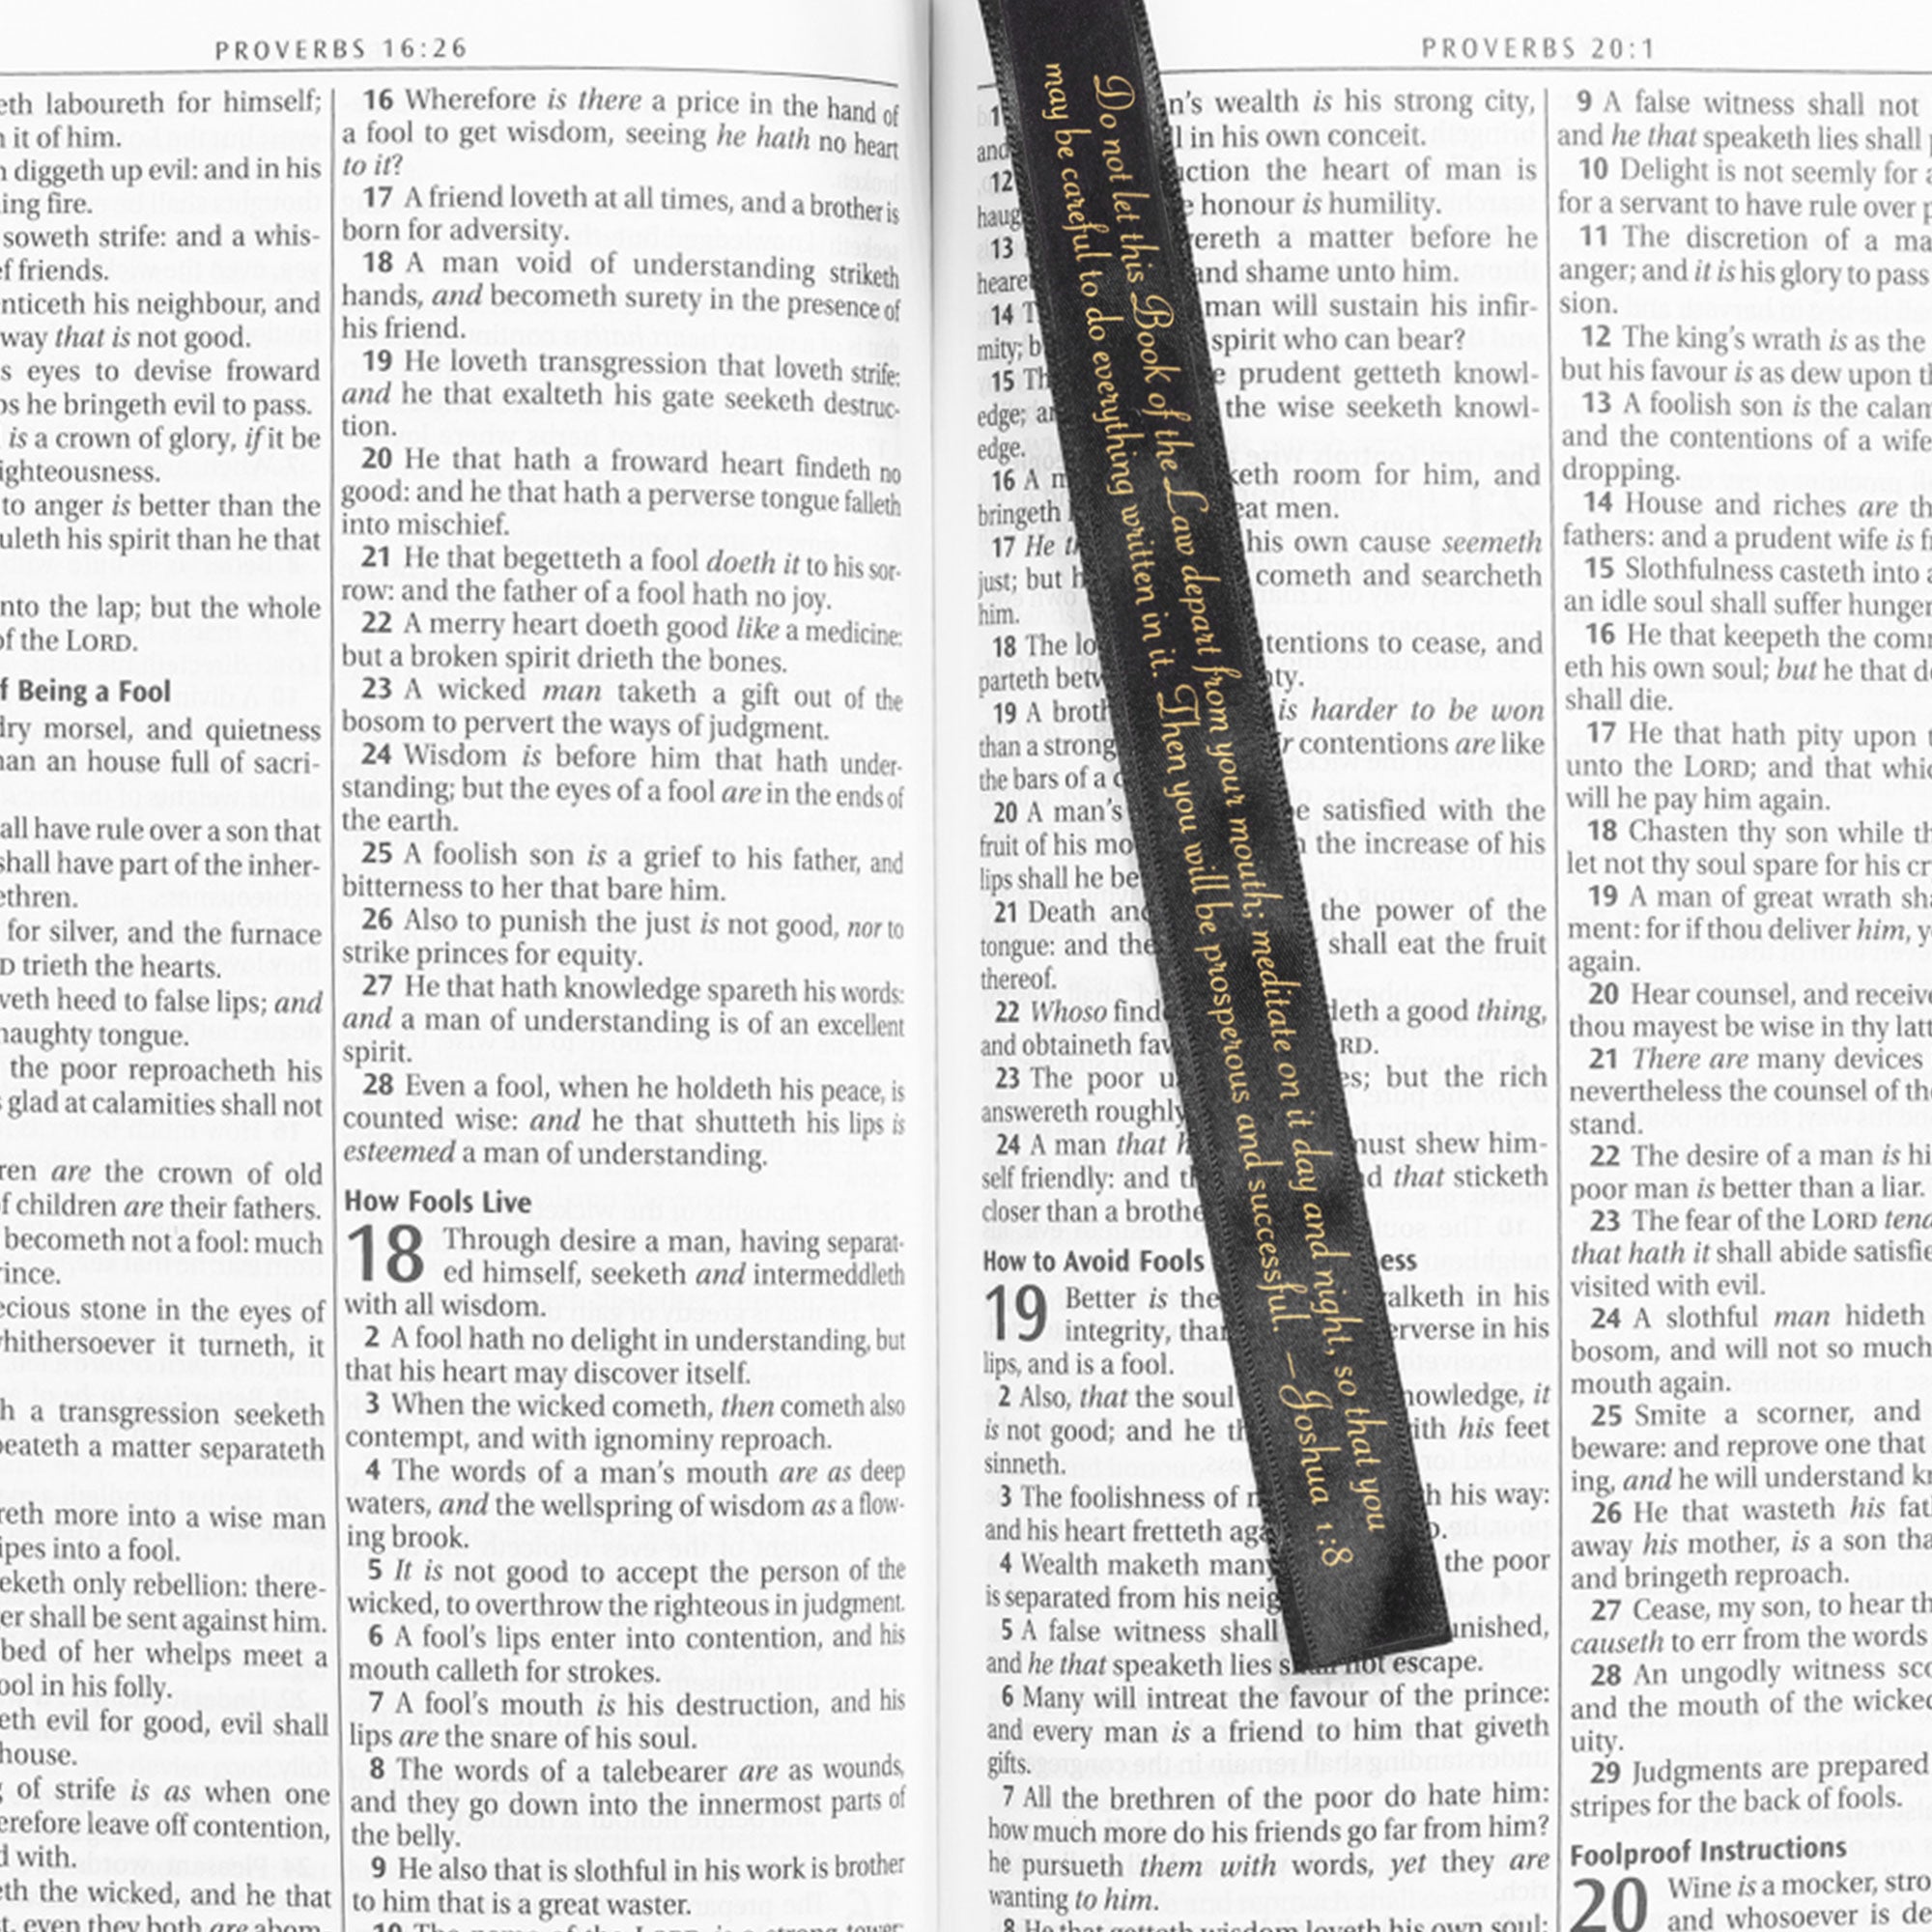 Divine Details: Bible Cover - Black Crosses